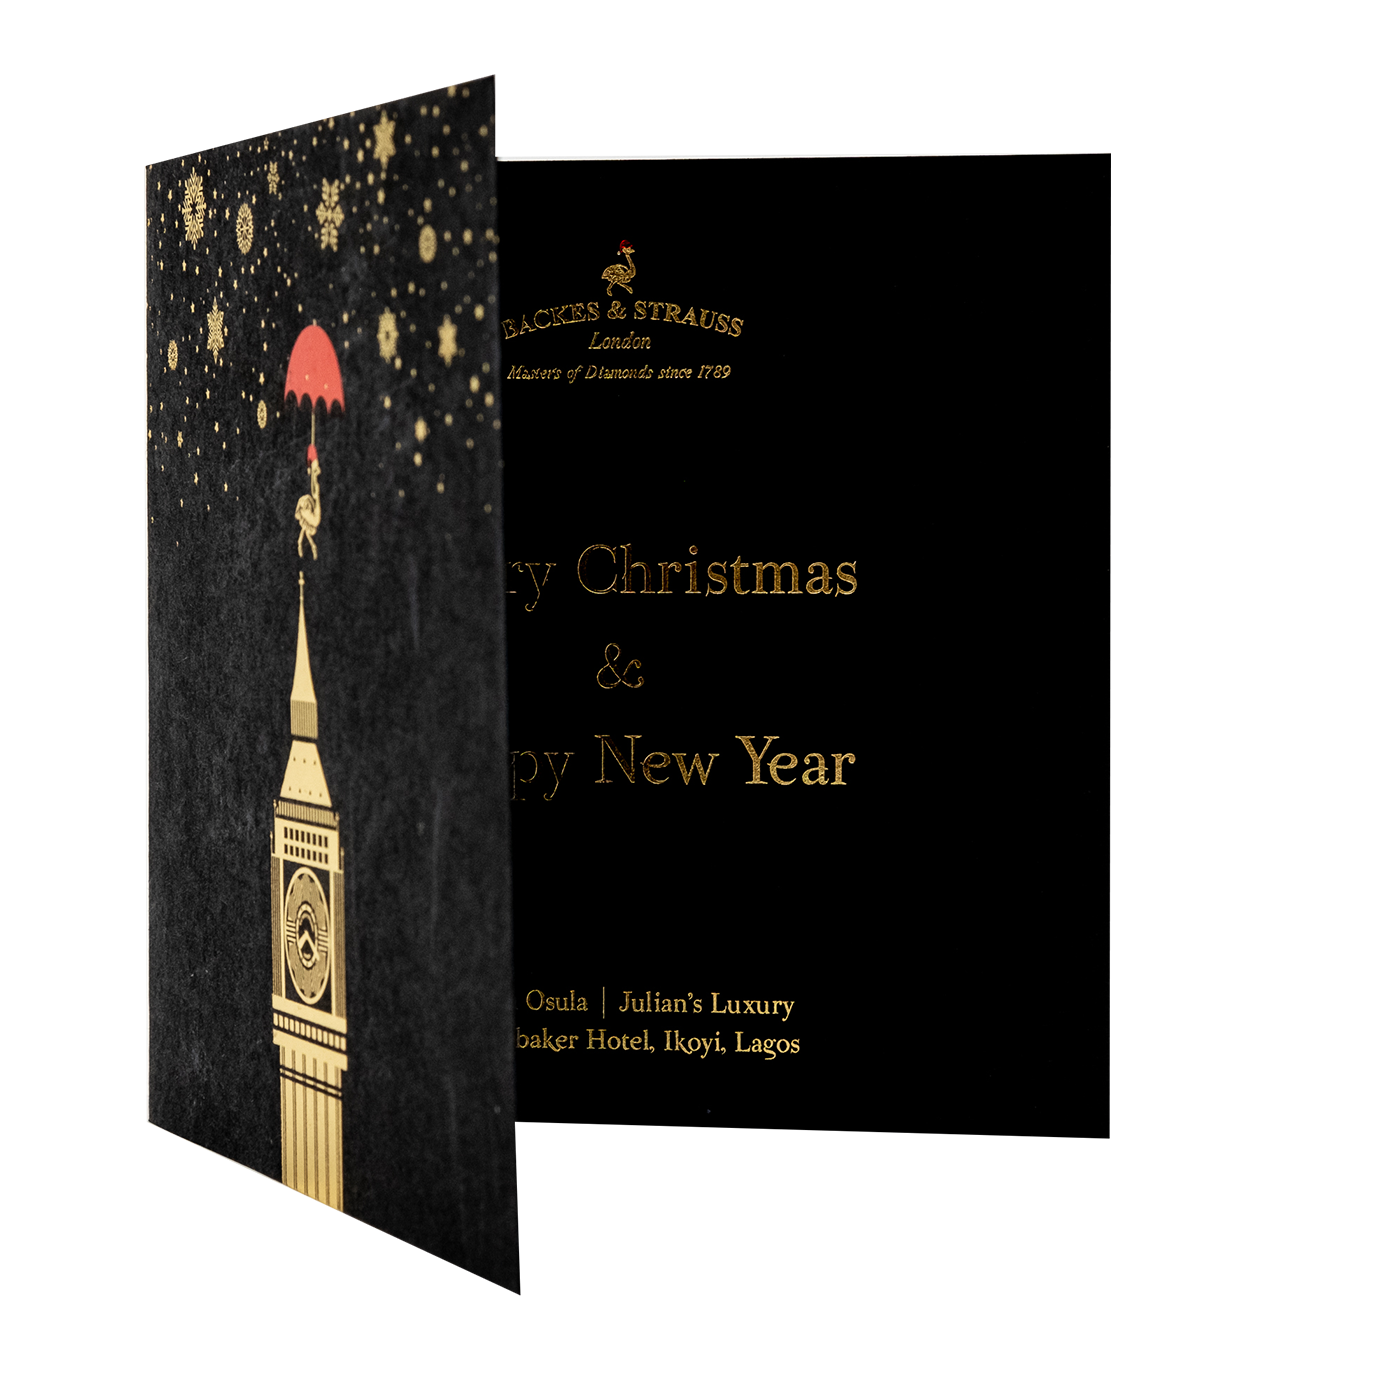 custom printed Christmas card onto black card with gold foil